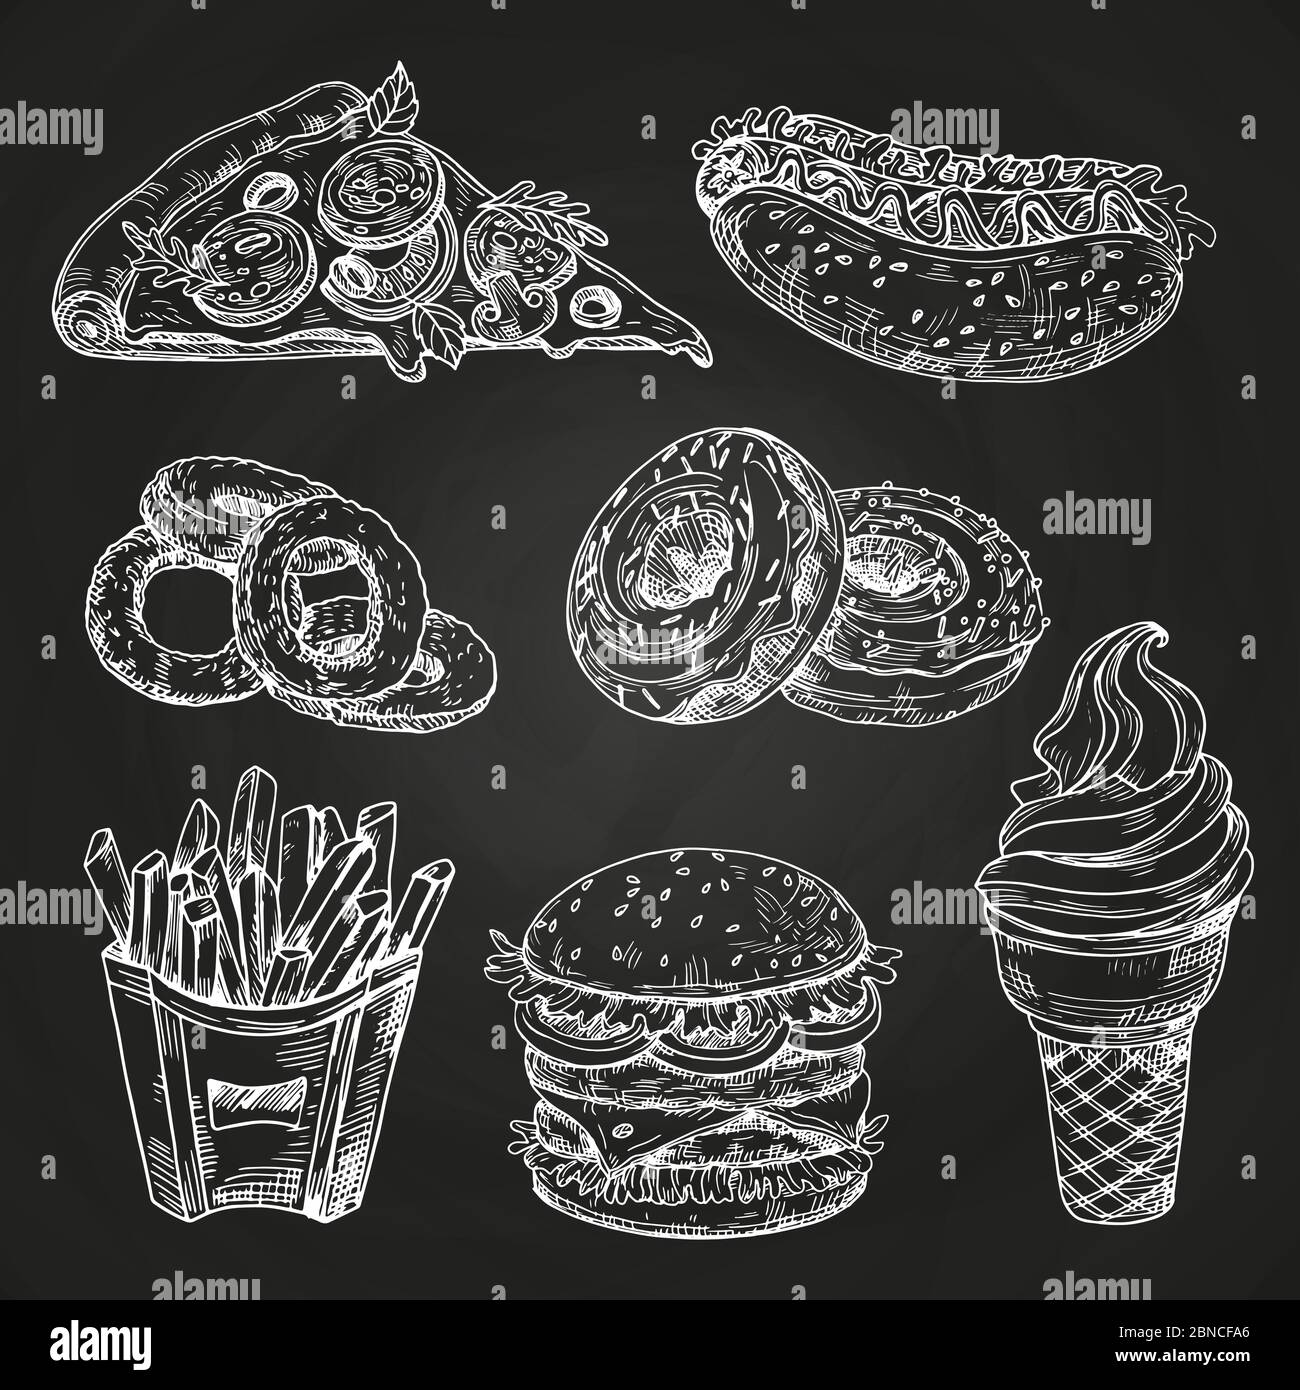 Hand drawn popular fast food on blackboard vector illustration. Fast food menu blackboard, sandwich and snack Stock Vector